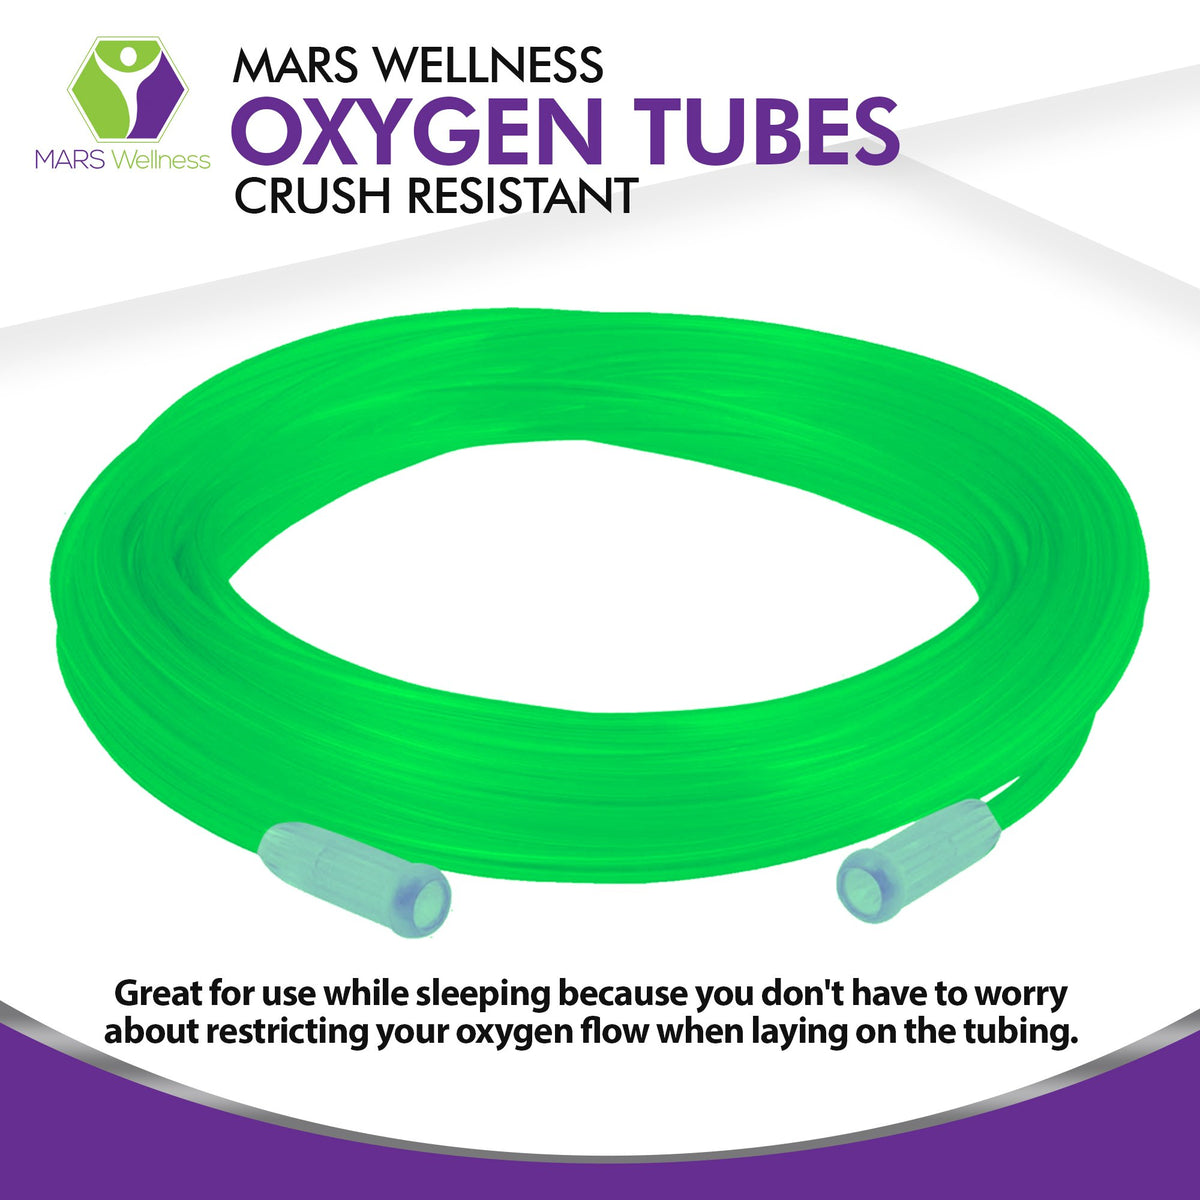 Mars Wellness Oxygen Tubing - Premium Green Crush Resistant Oxygen Tubes - 25 Foot